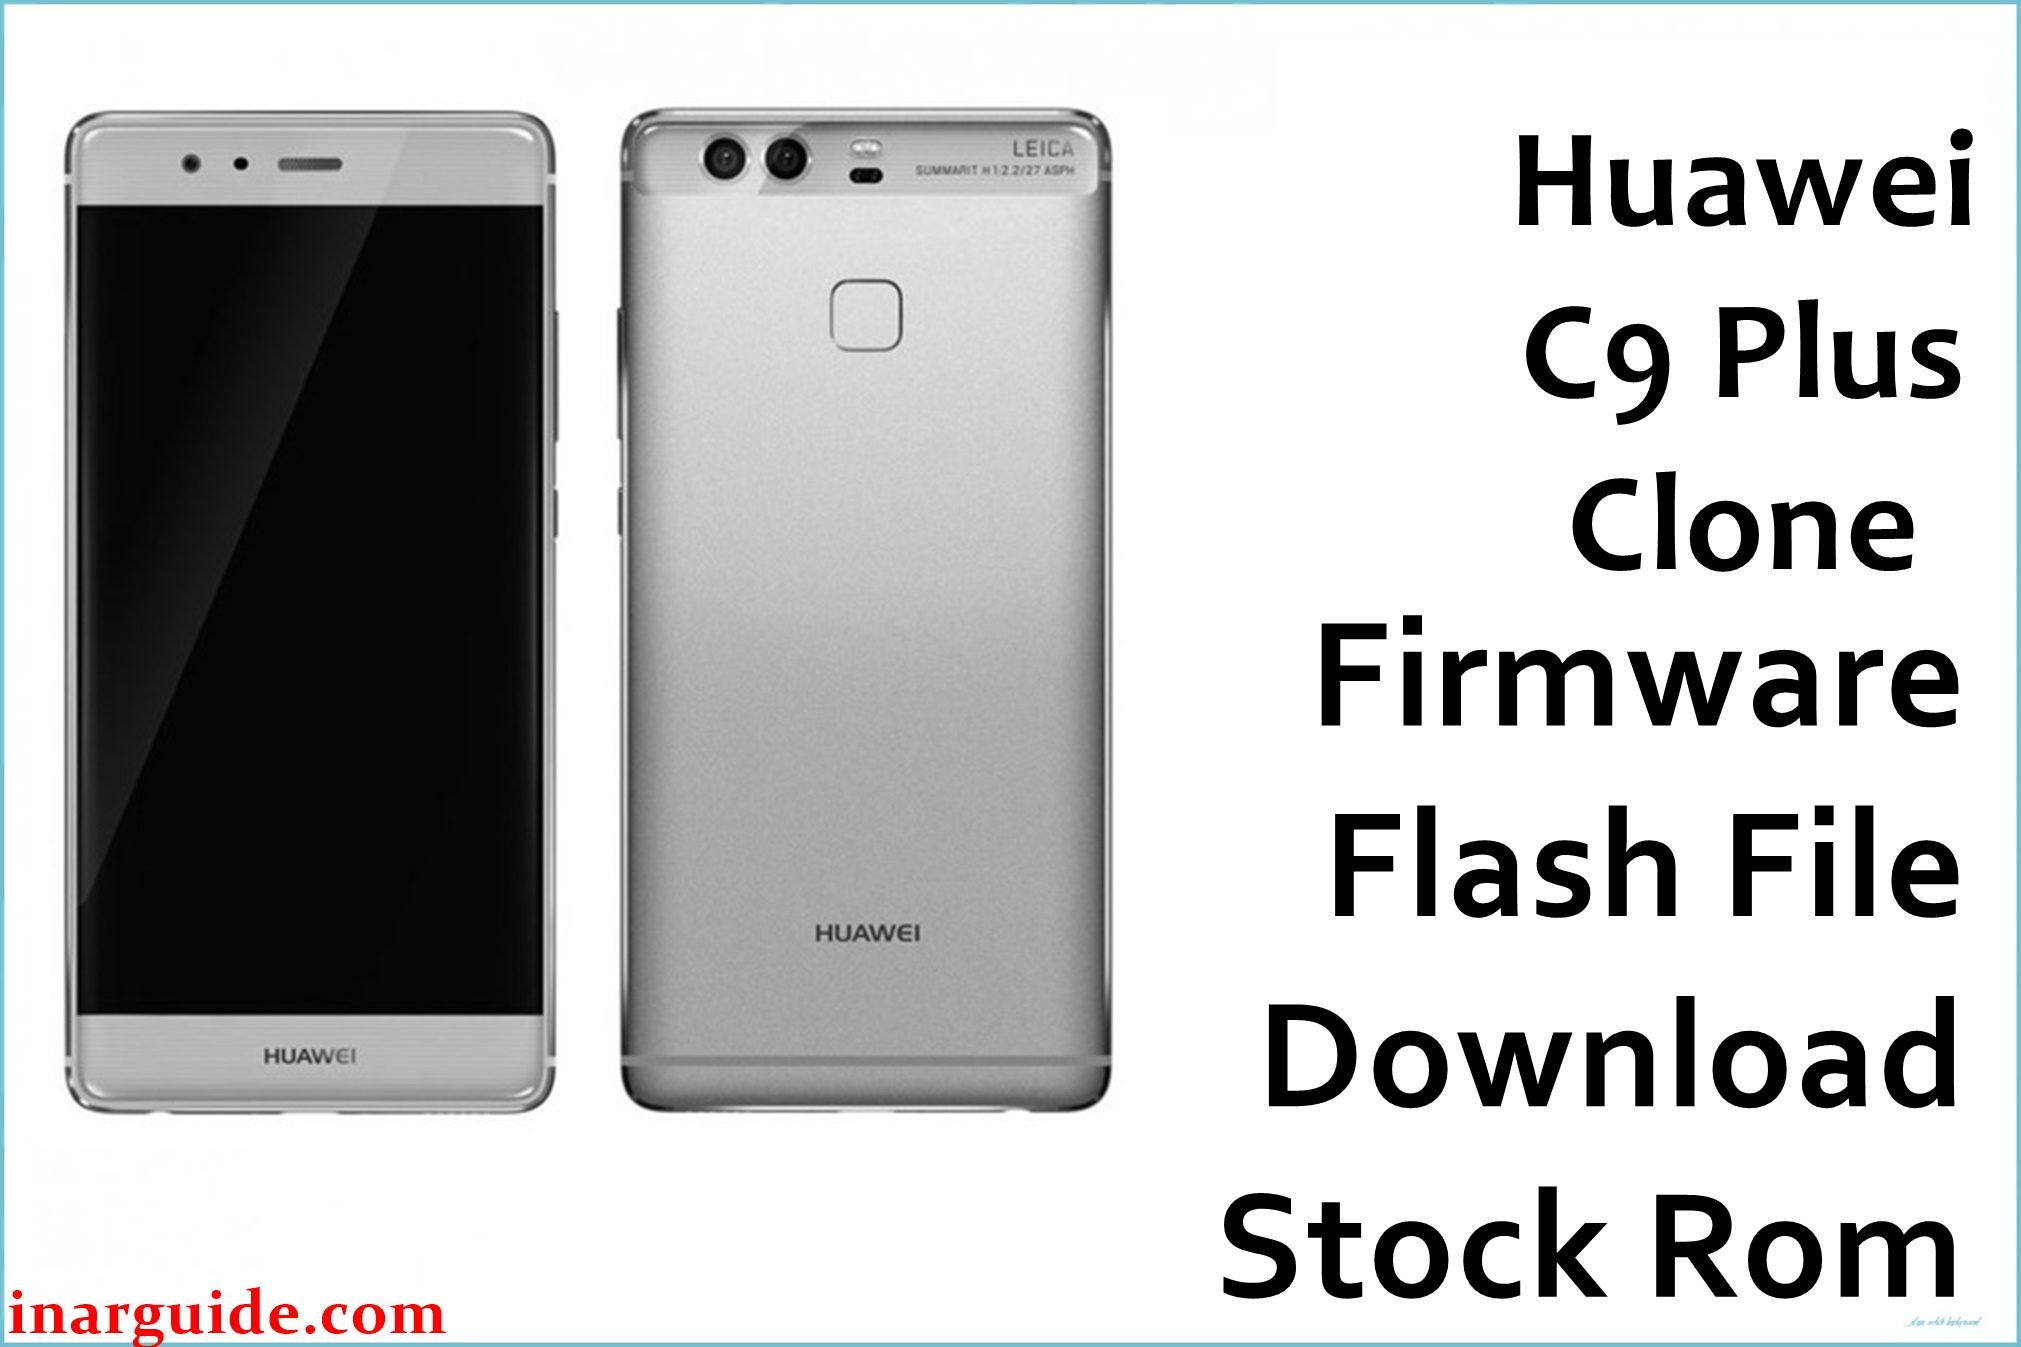 Huawei C9 Plus Clone